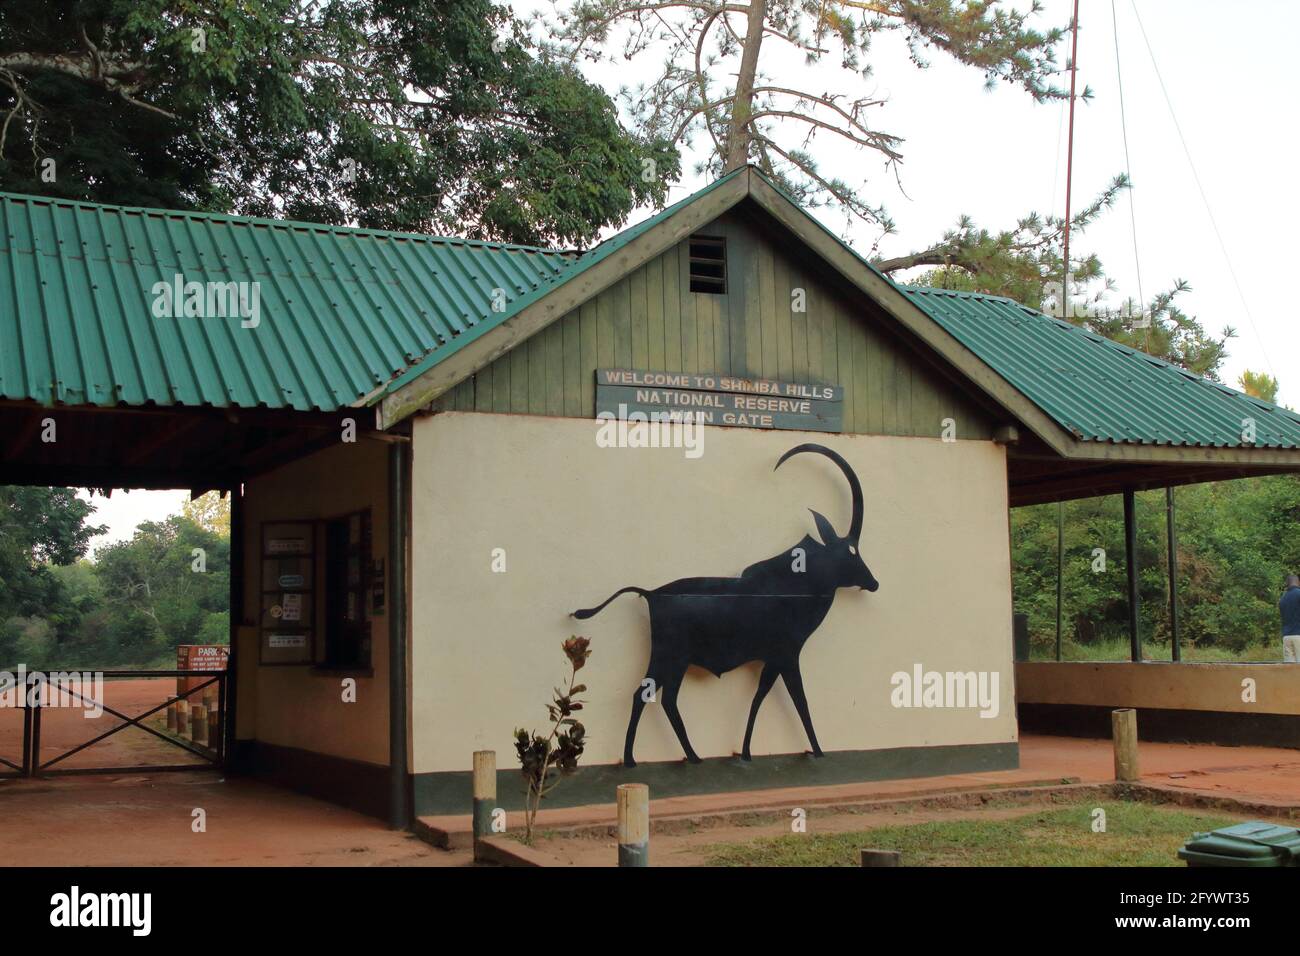 KENIA, SHIMBA HILLS NATIONAL RESERVE - 09. AUGUST 2018: Haupttor zum Shimba Hills National Reserve Stockfoto